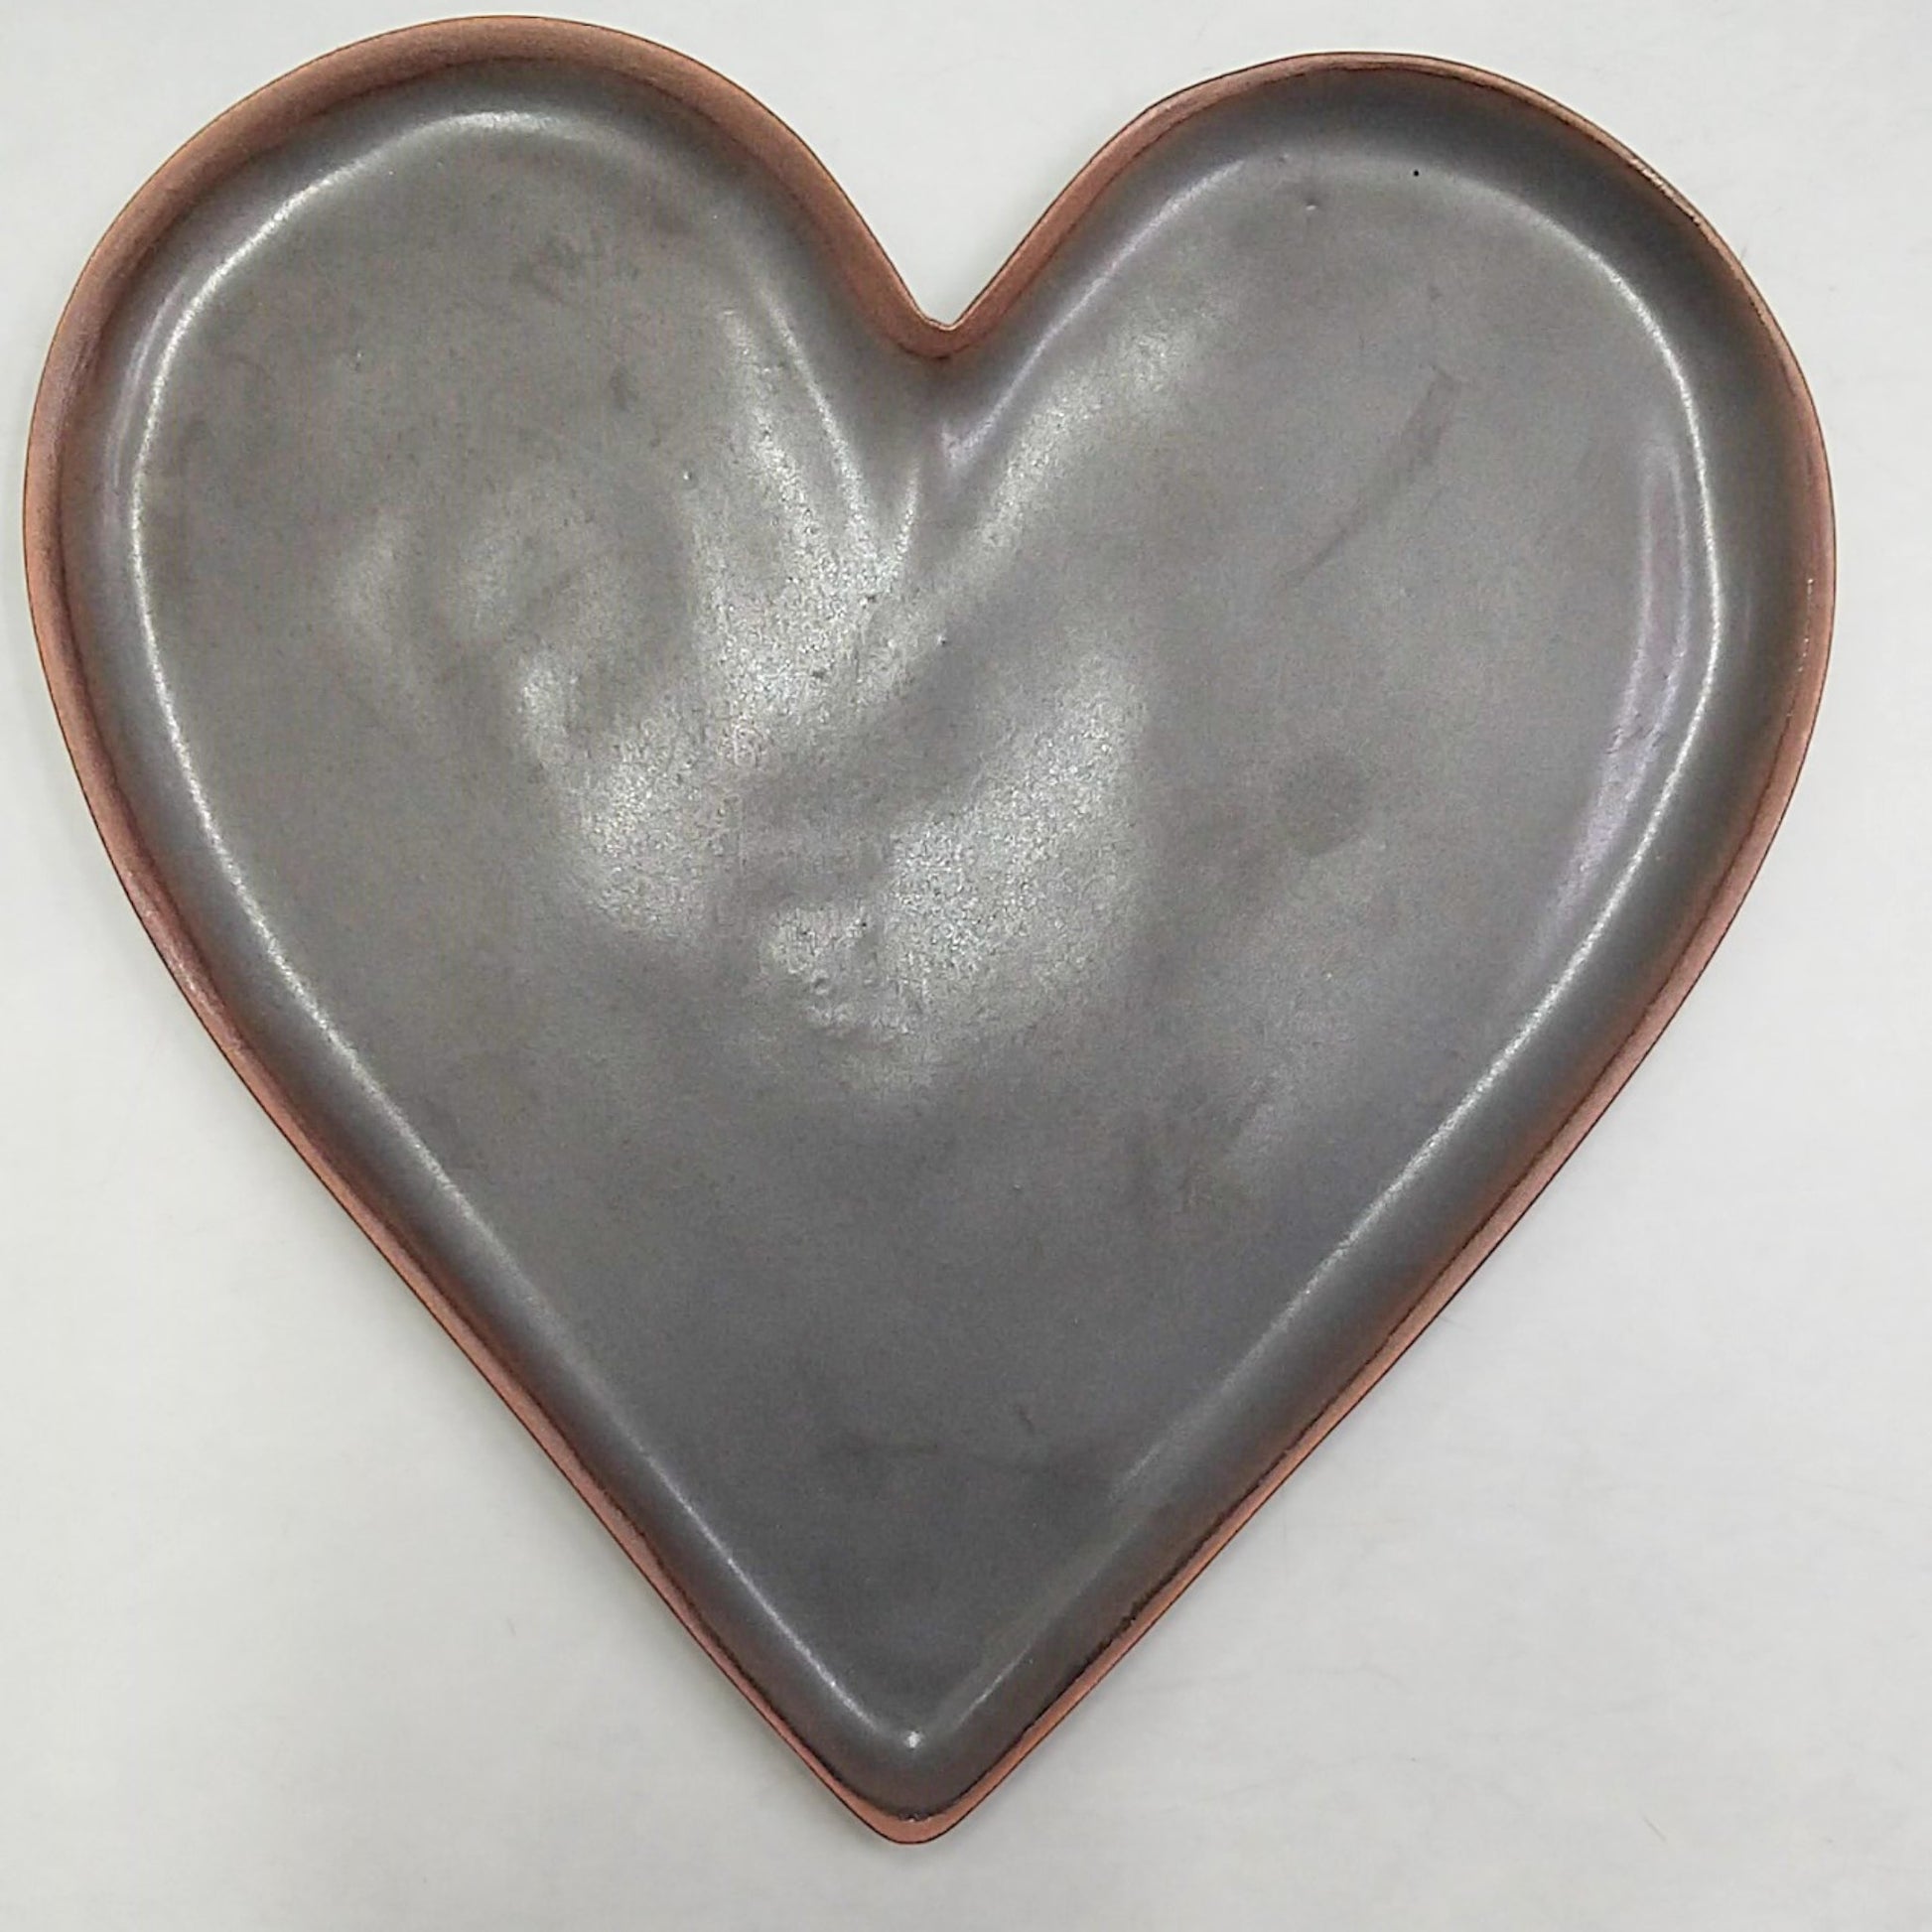 Ceramic heart plate in chocolate brown glaze